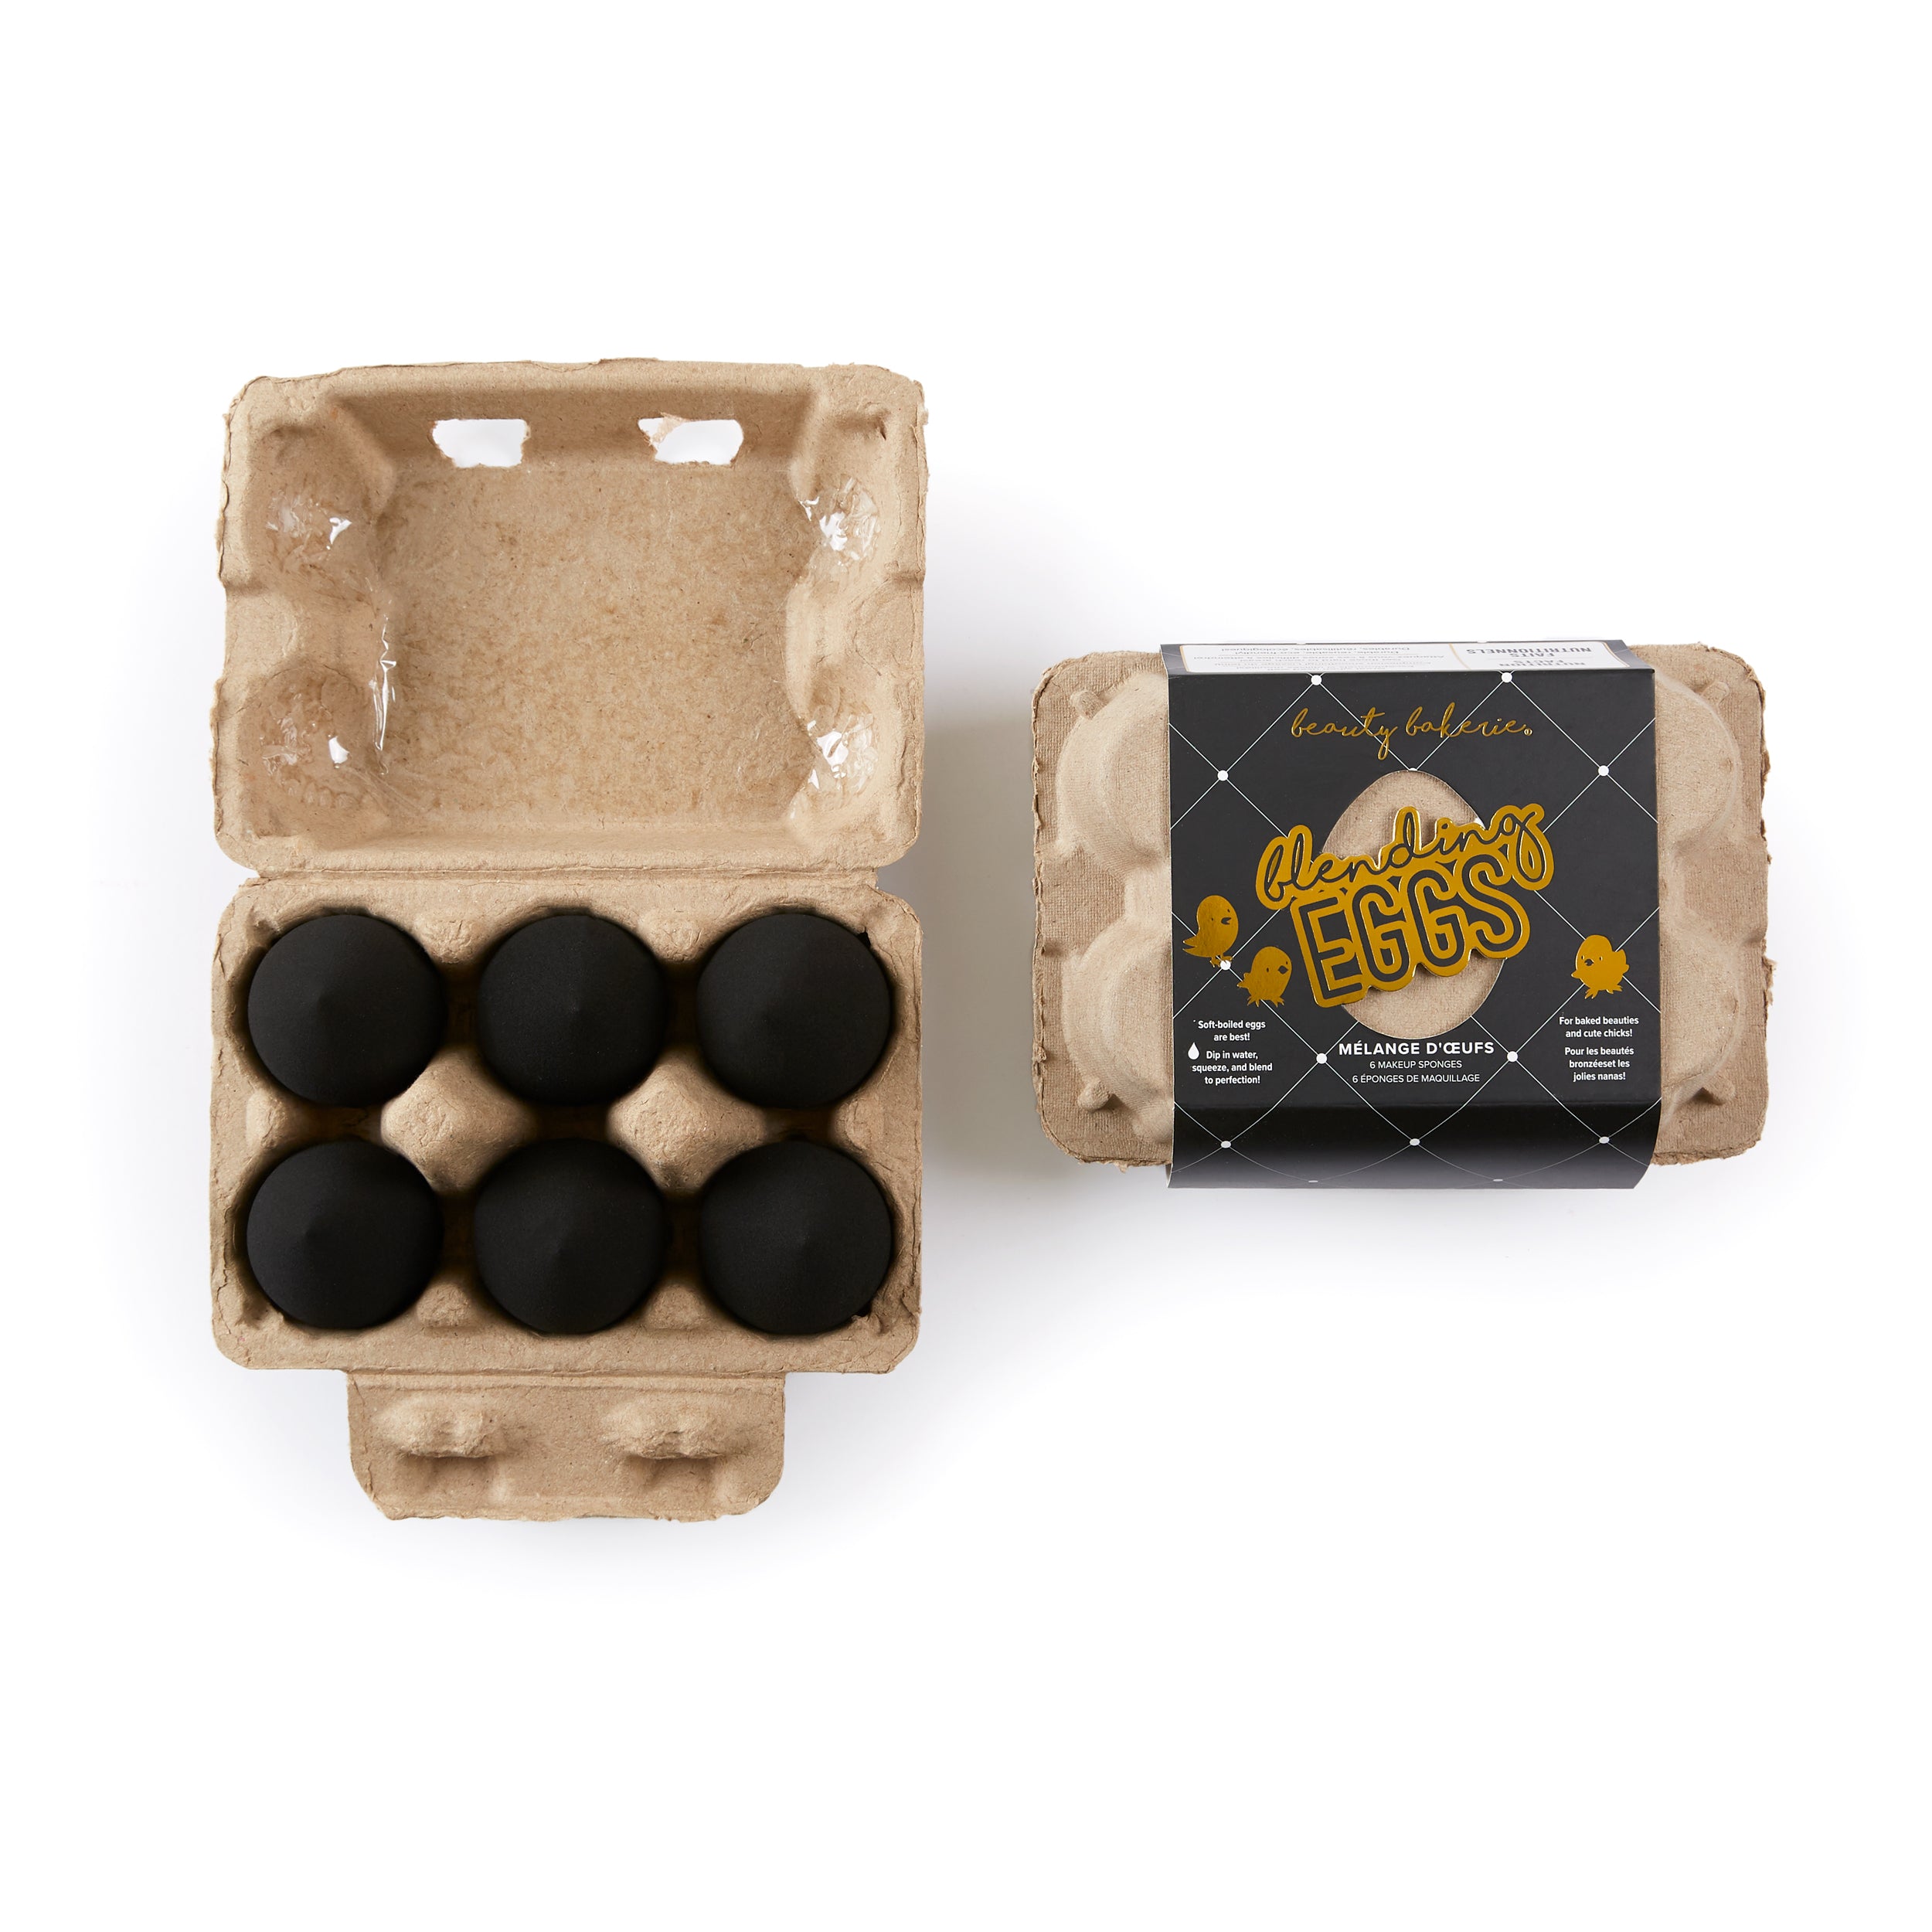 Egg-cellence Black Beauty Sponges